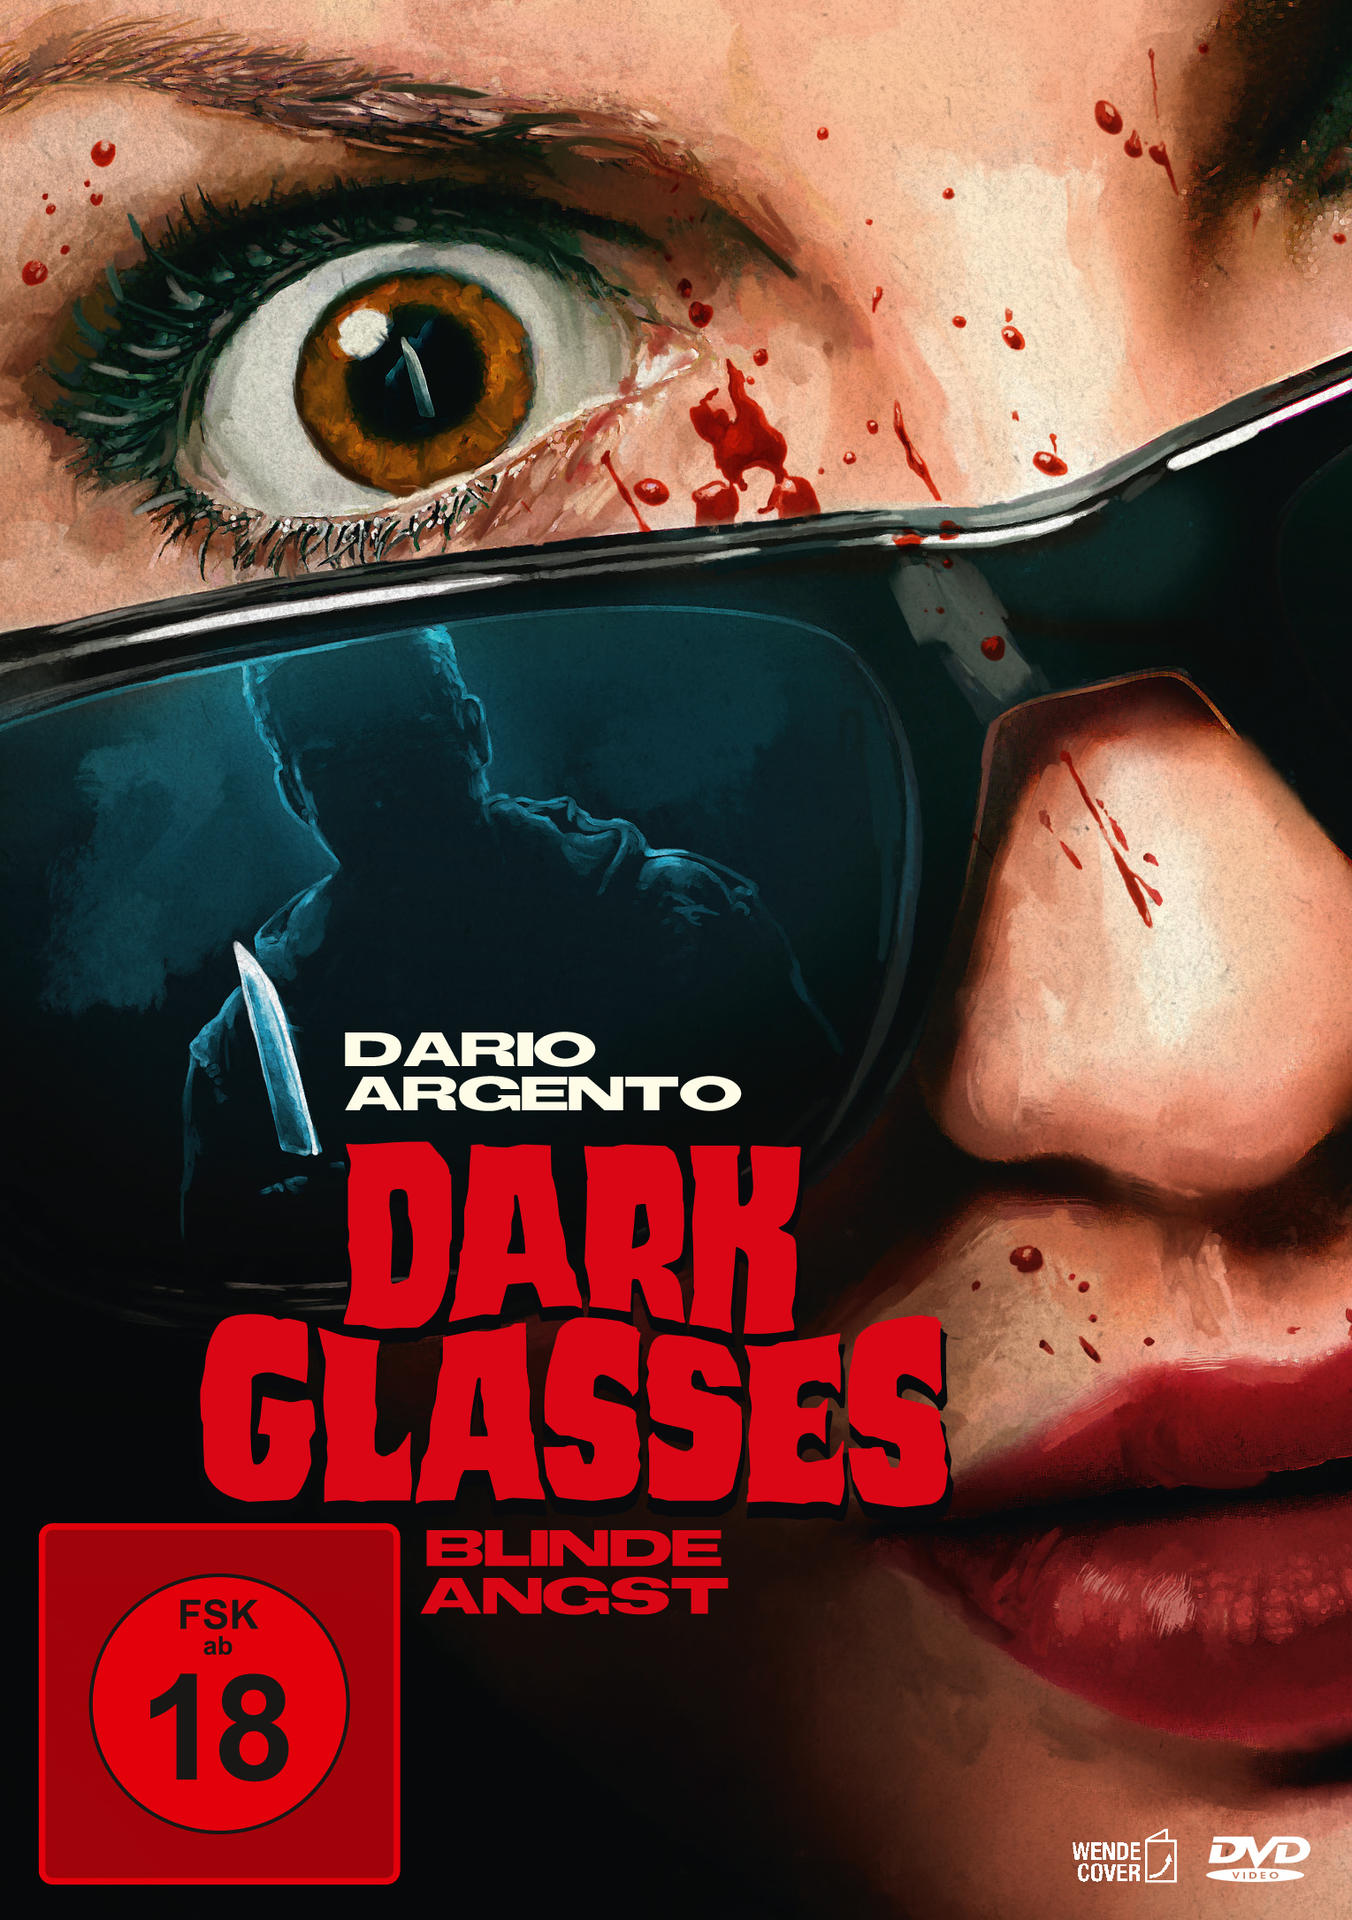 Dark Glasses Angst Blinde - DVD